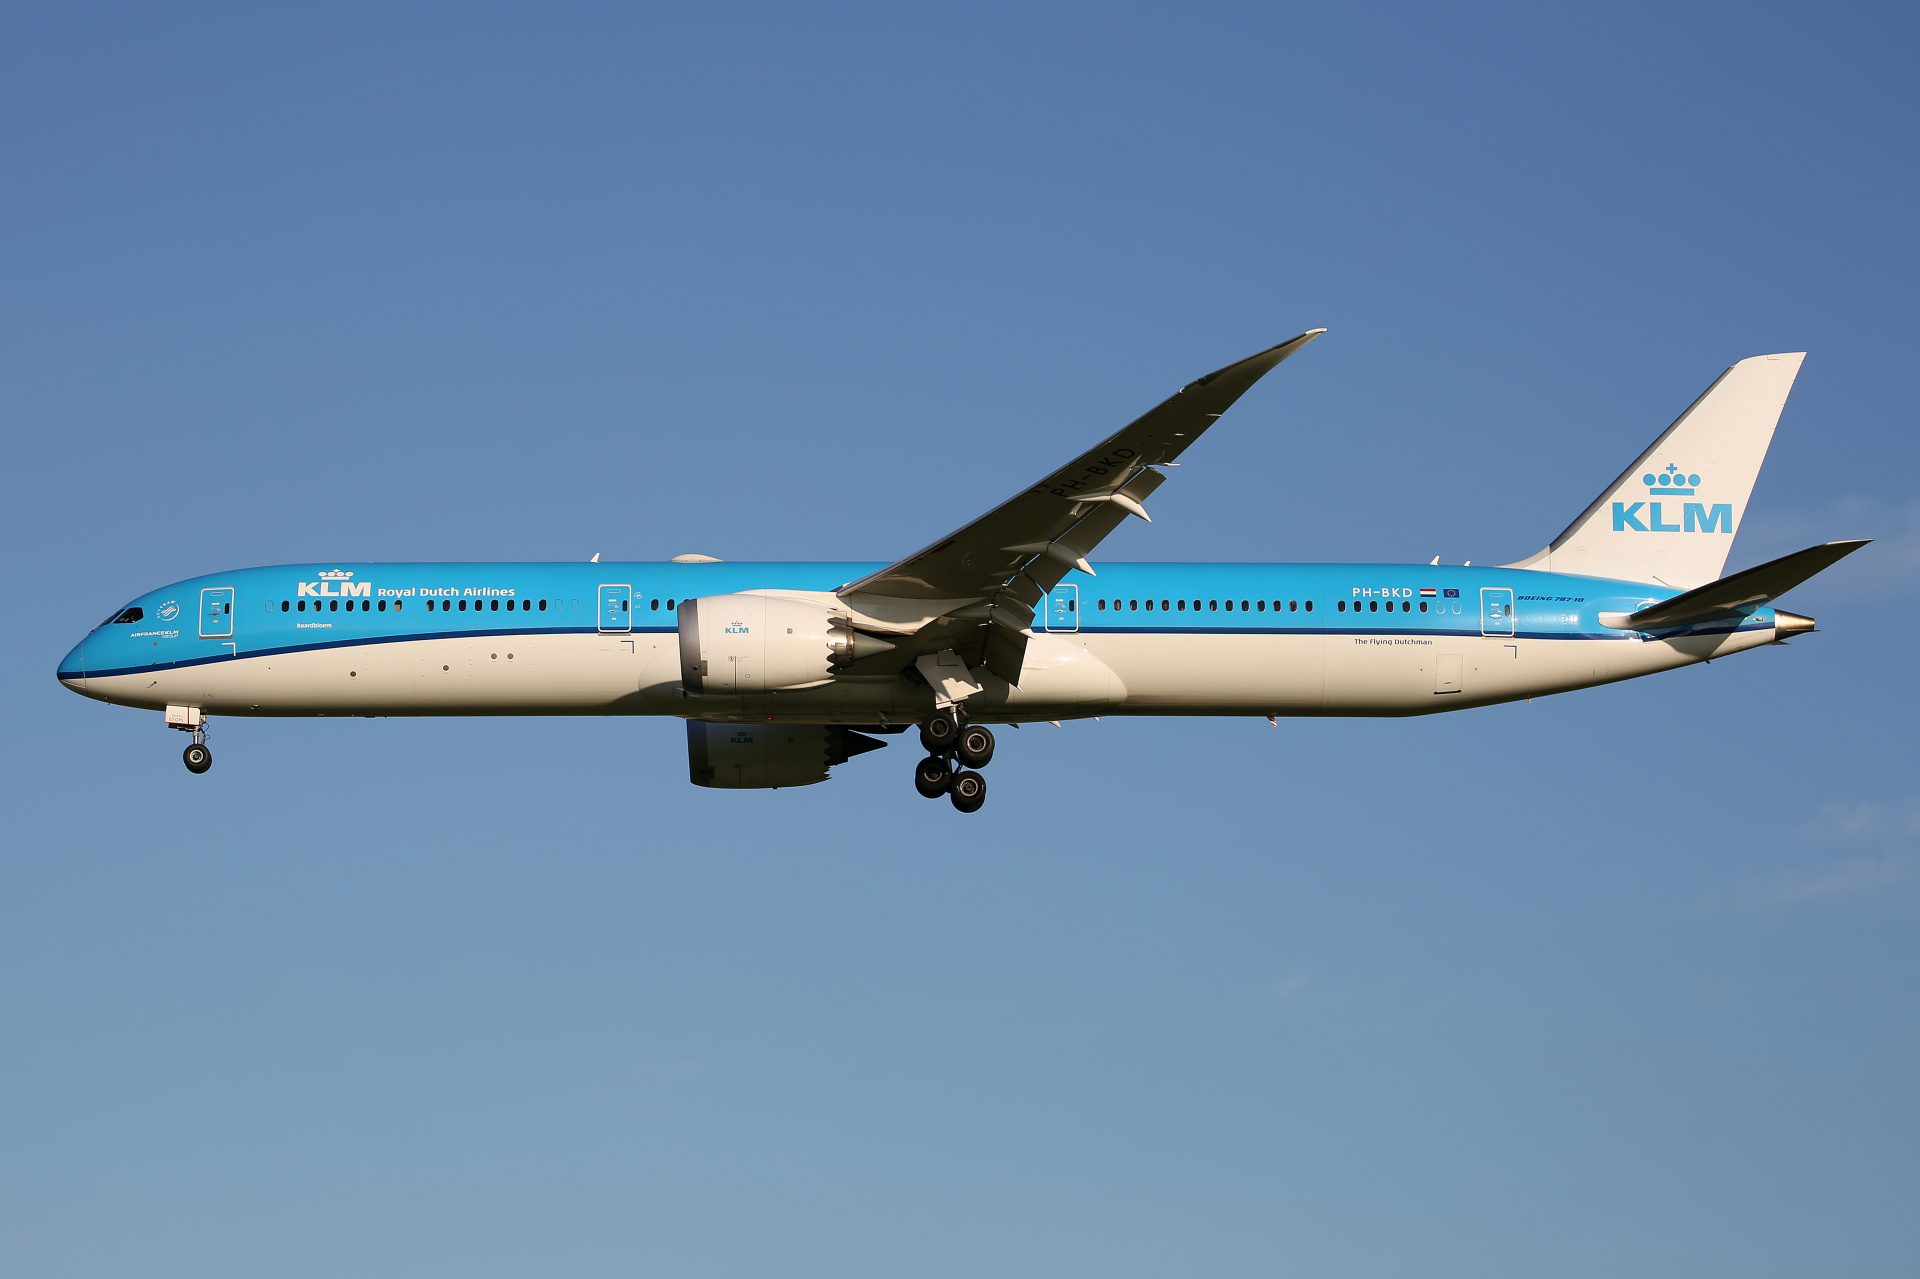 PH-BKD, KLM Royal Dutch Airlines (Aircraft » Schiphol Spotting » Boeing 787-10 Dreamliner)